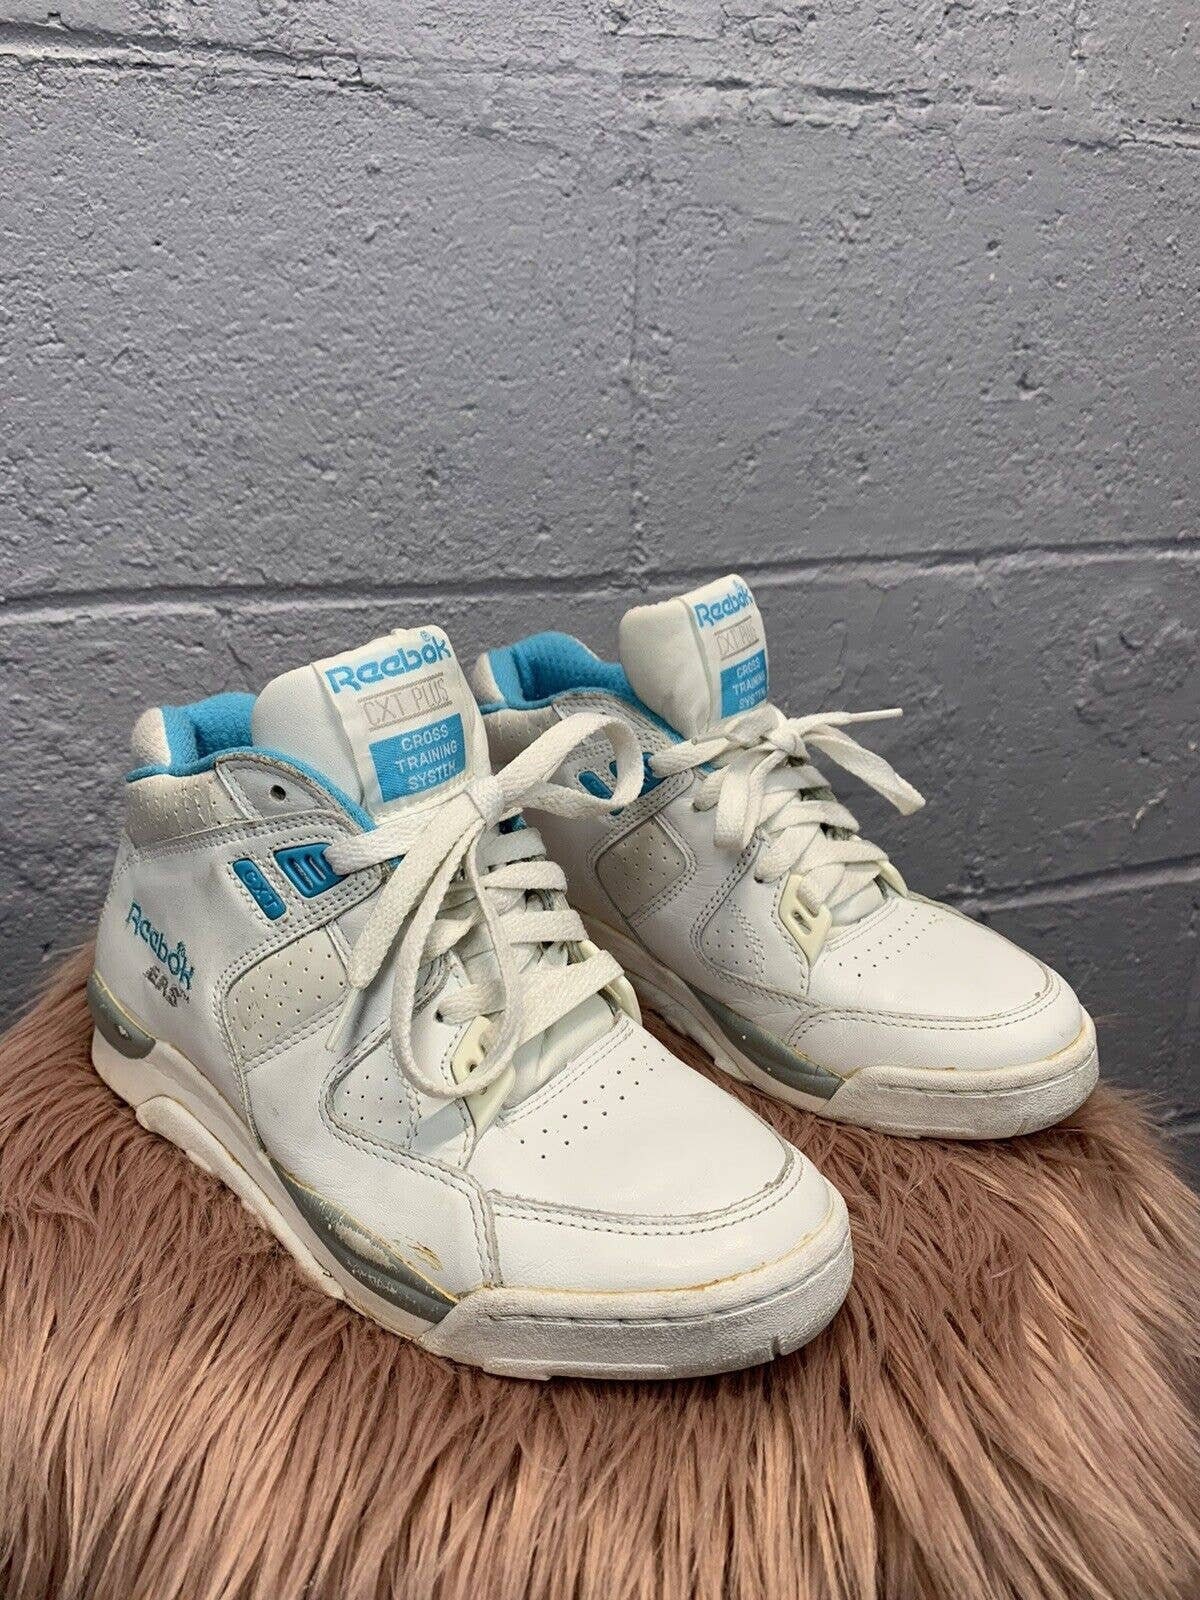 Reebok CRX Sneakers Size 7 White Aqua Cross